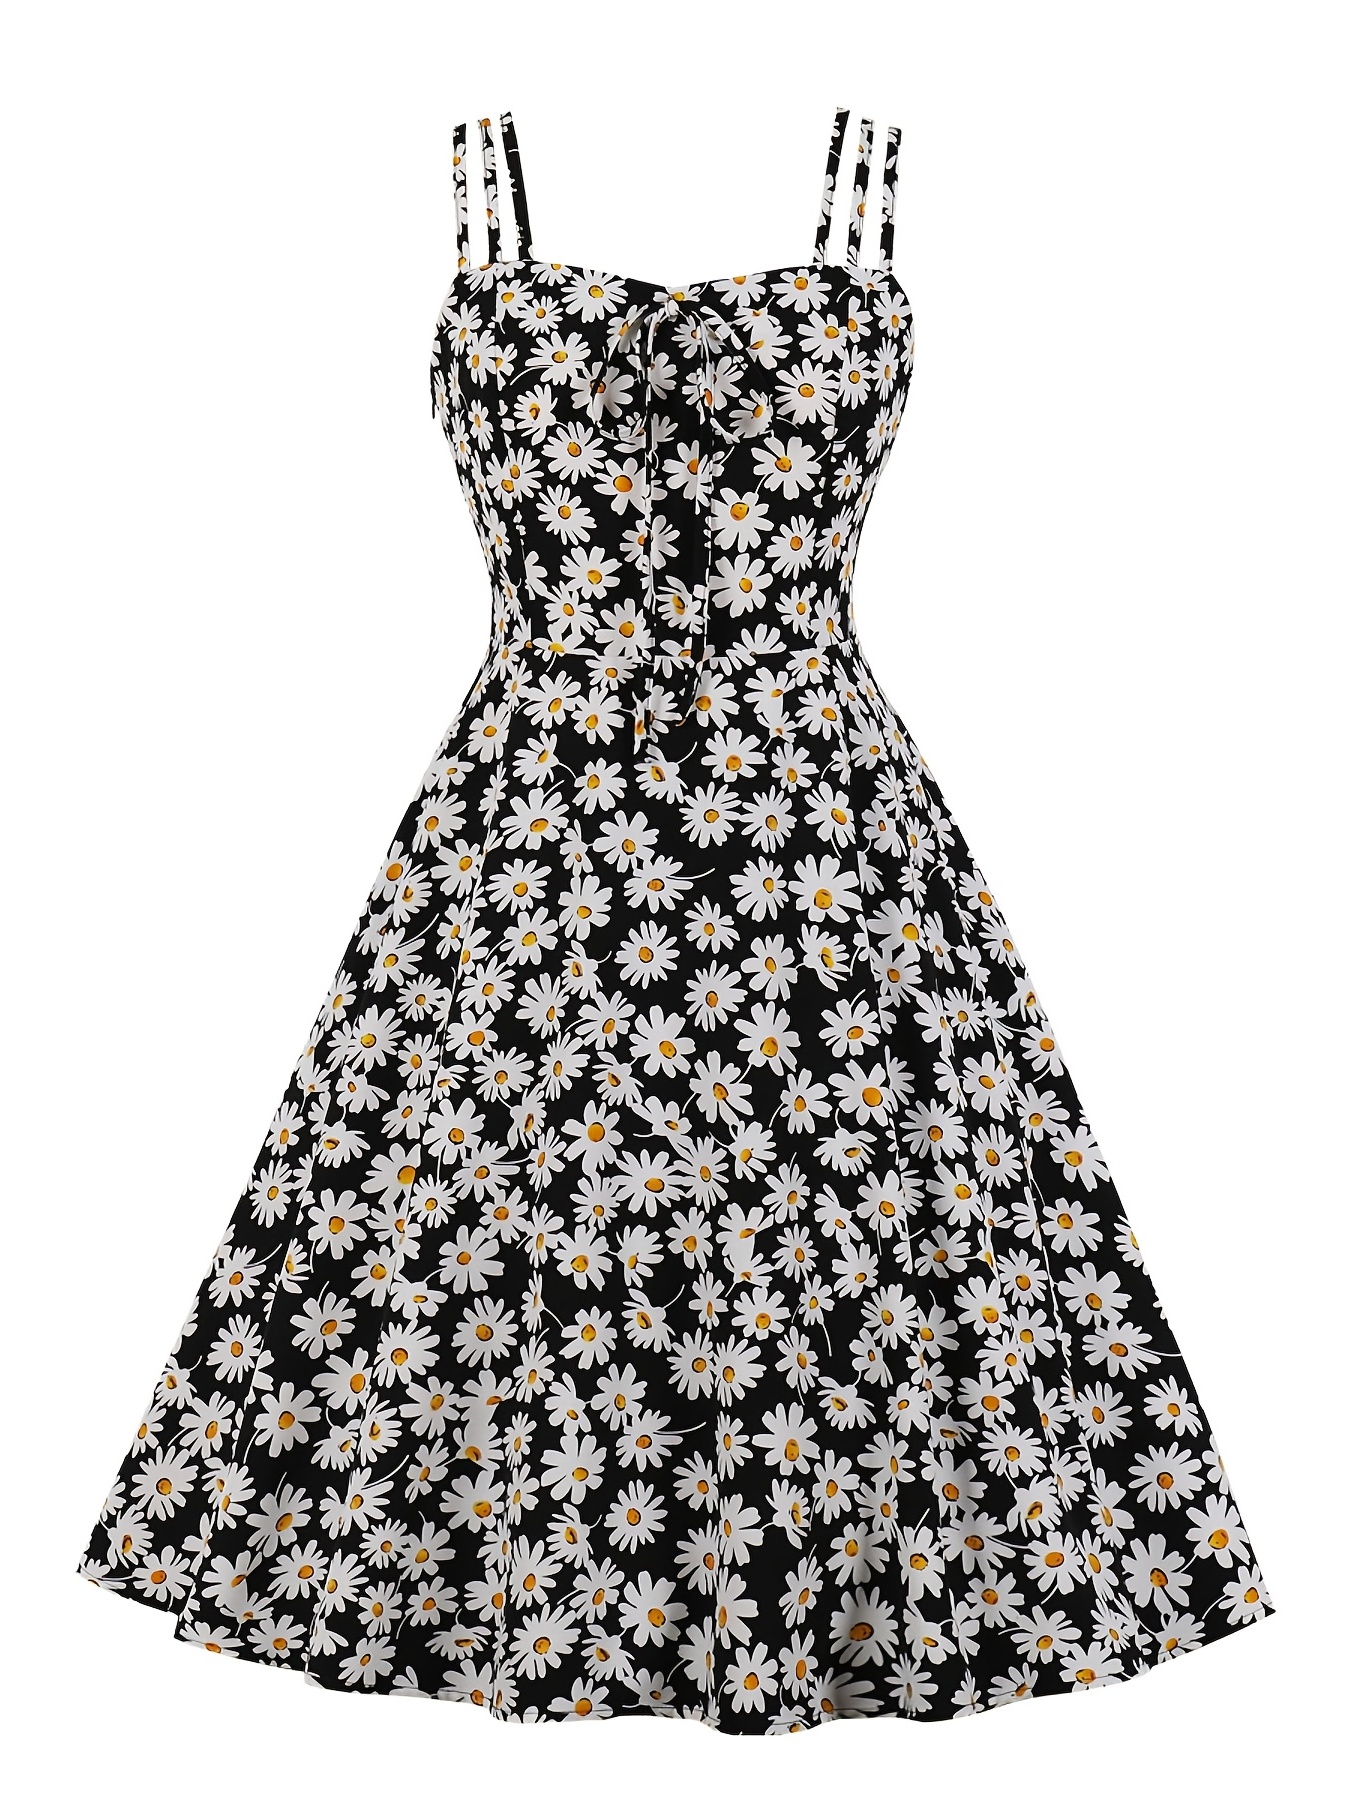 Black And White Polka Dot Rockabilly 50s Swing Dress – Pretty